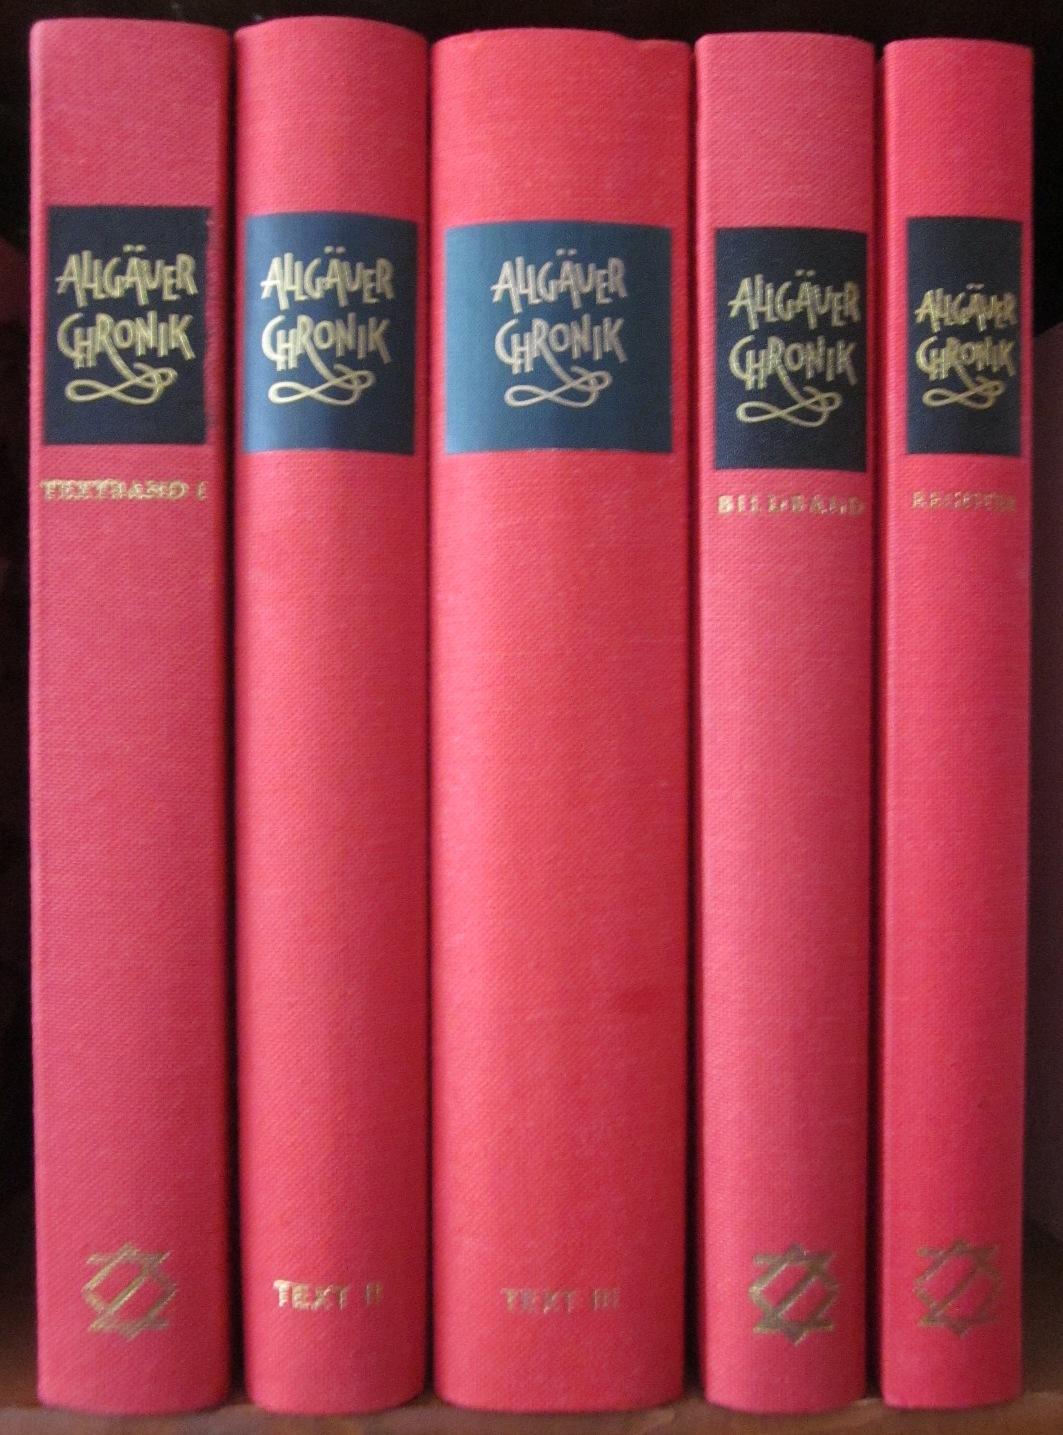 Allgauer Chronik (German Edition)